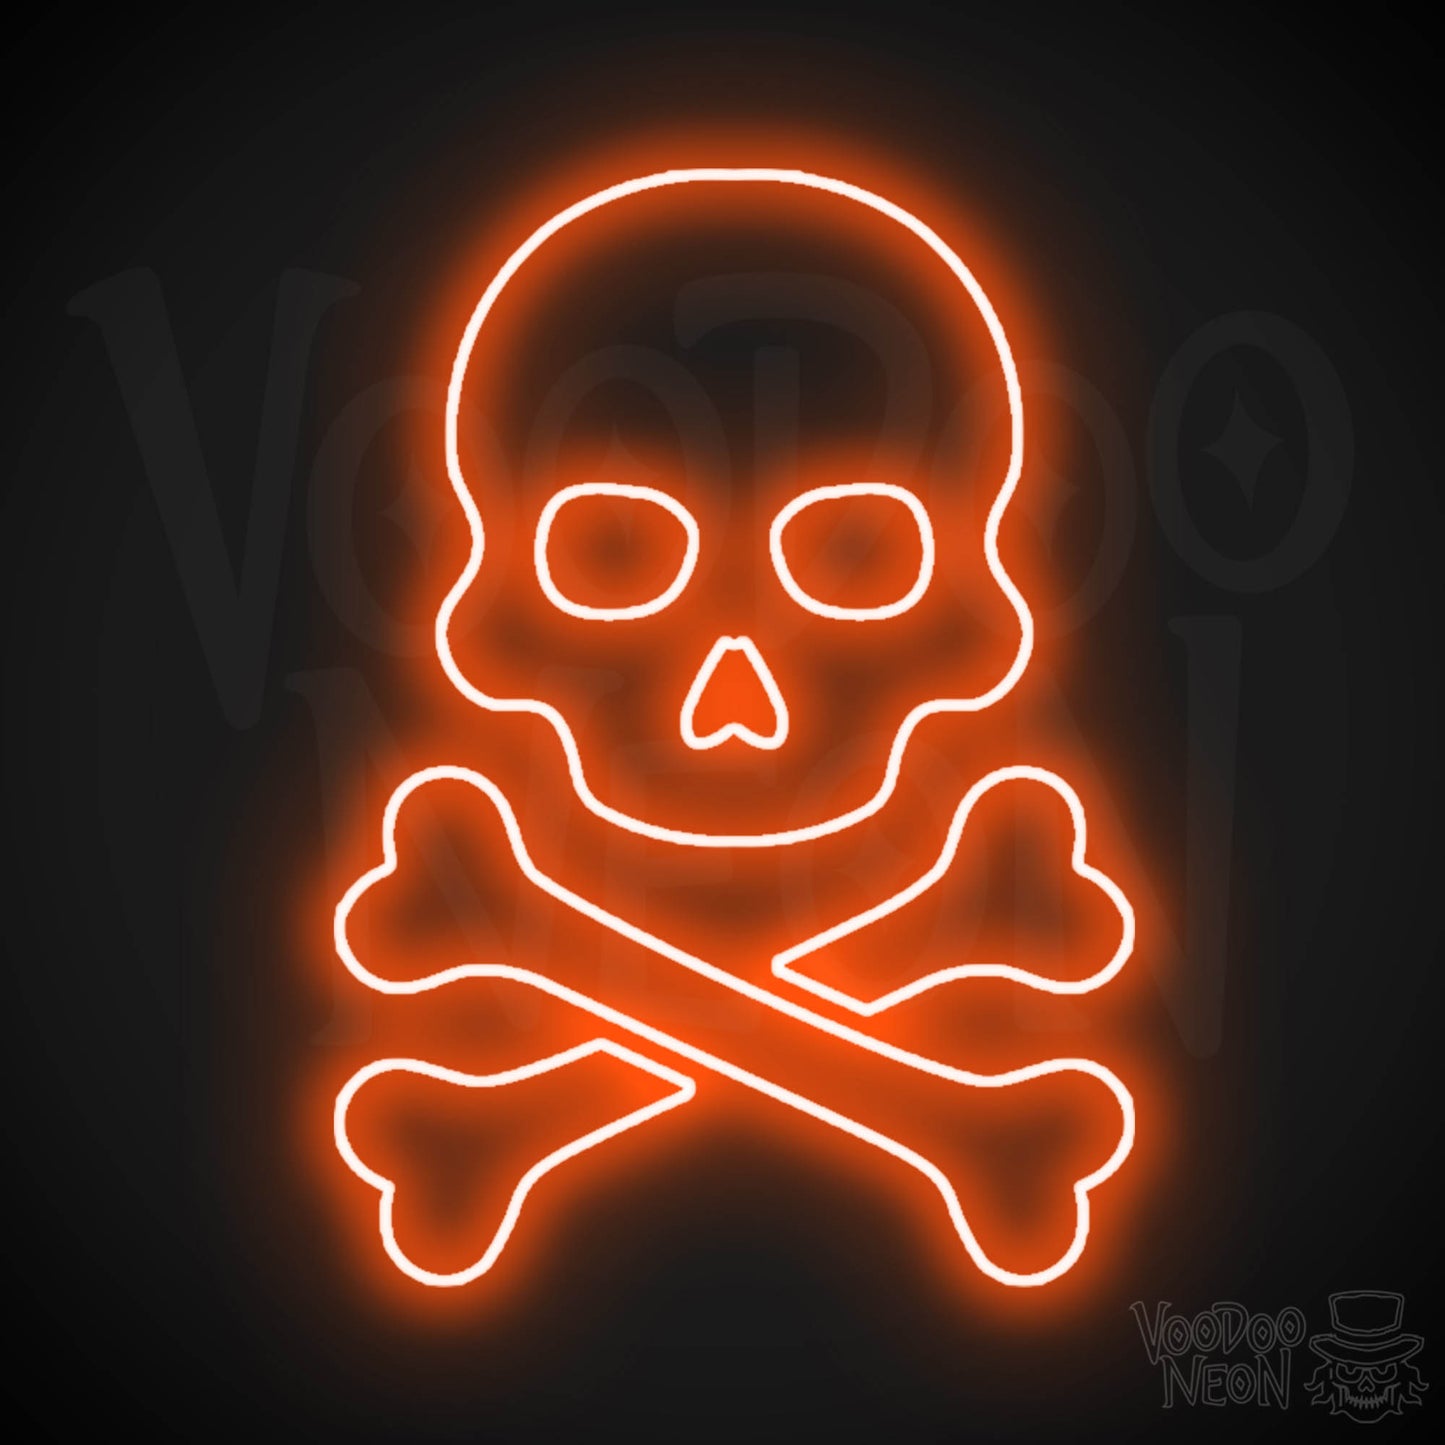 Pirate Skull & Crossbones Neon Sign - Neon Pirate Skull & Crossbones Sign - LED Lights - Color Orange